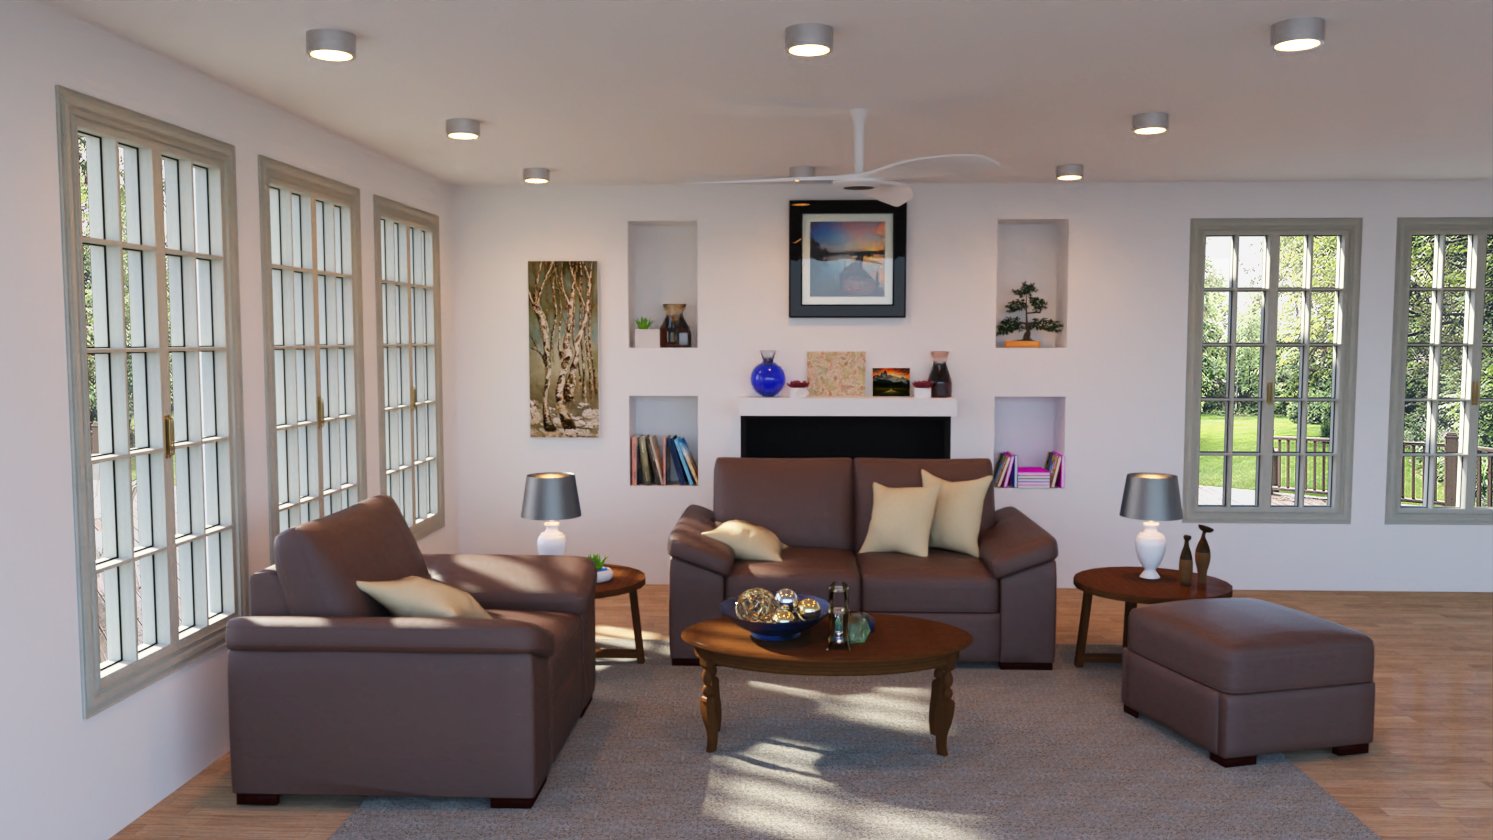 Digitallab3d Living Room by: Digitallab3D, 3D Models by Daz 3D